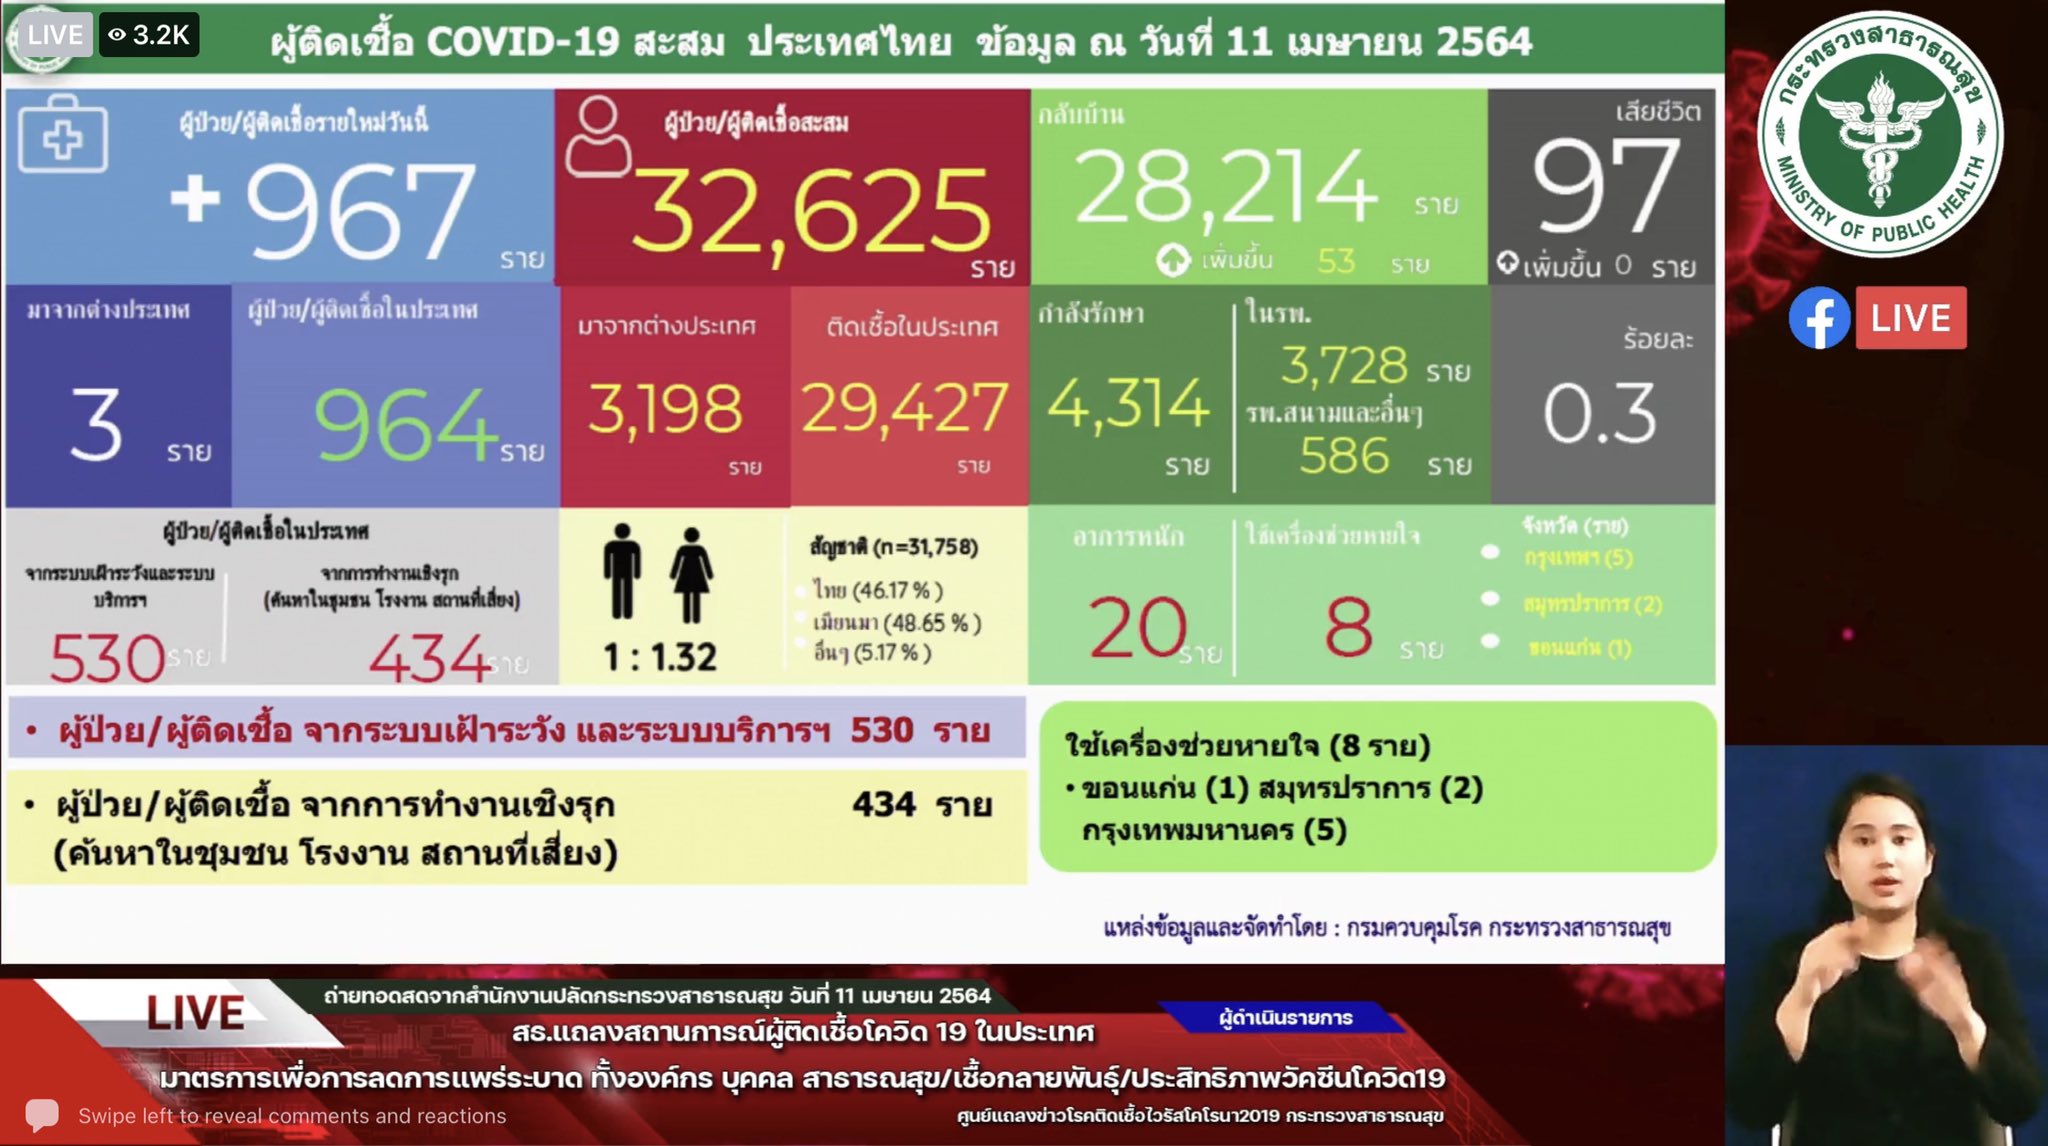 www.thaiguide.dk/images/forum/covid19/smitte%20status%20myndigheder%2011-04-21.jpeg